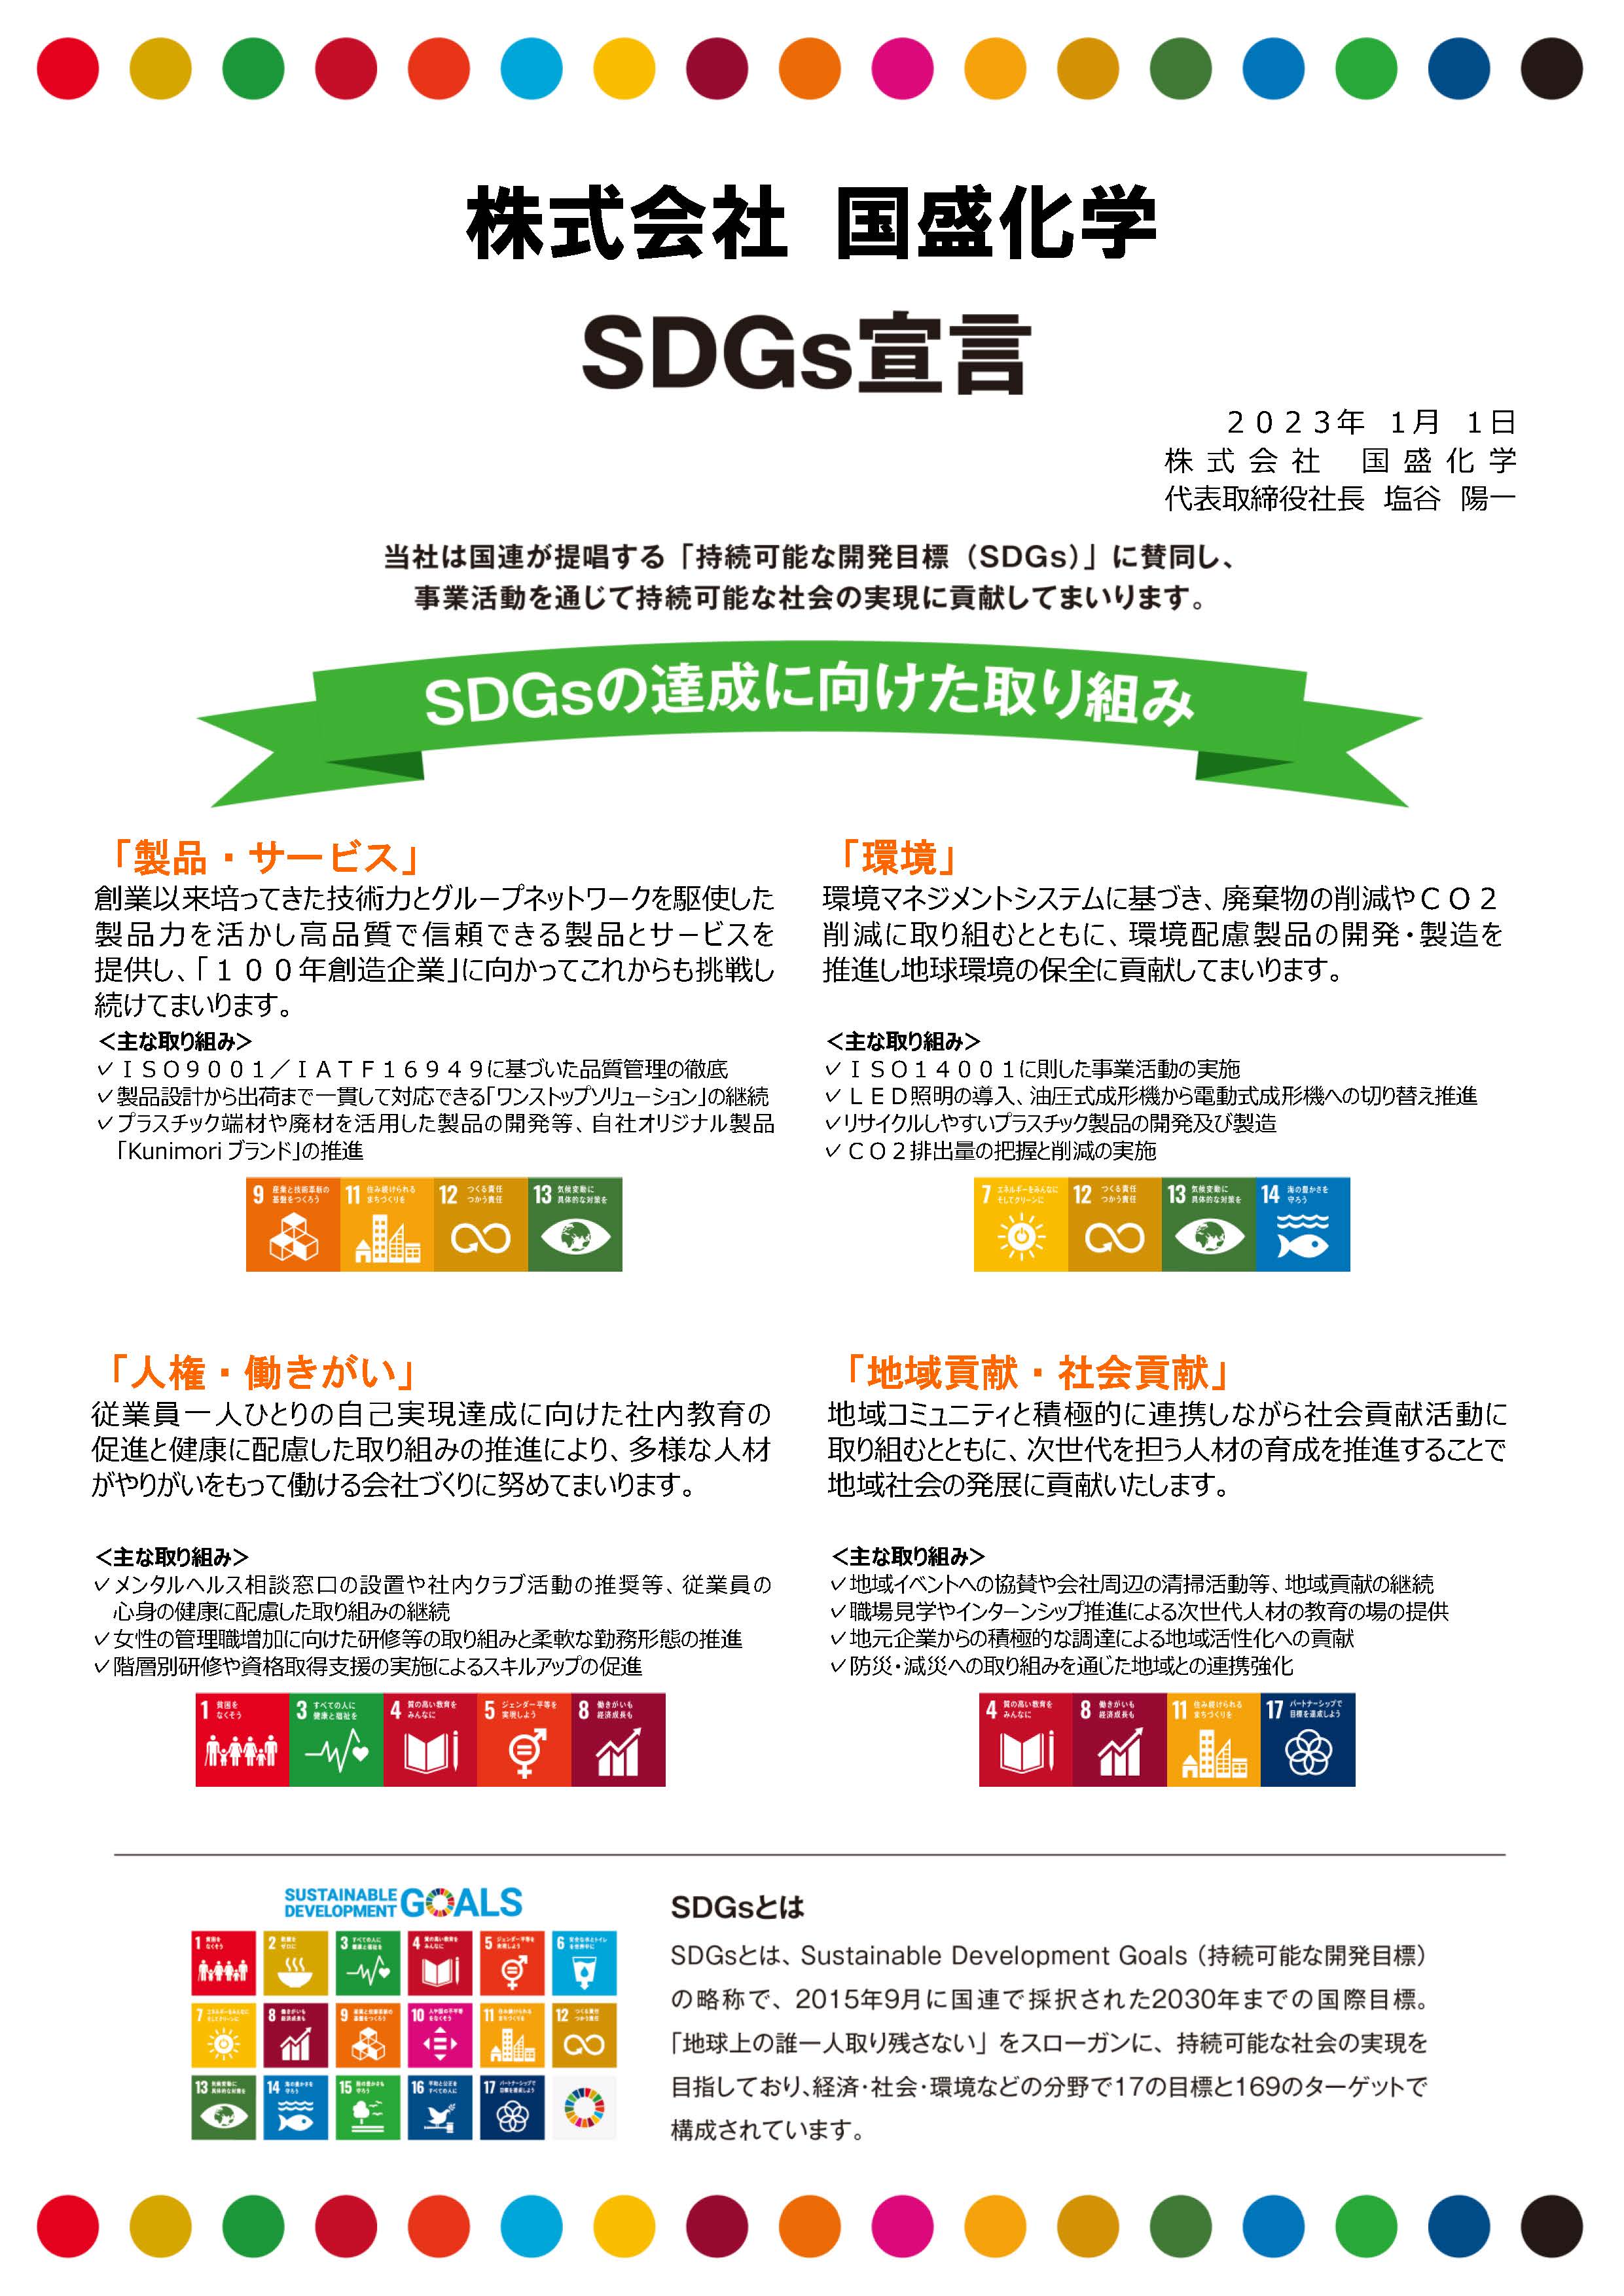 SDGs 持続可能な開発目標への取り組み